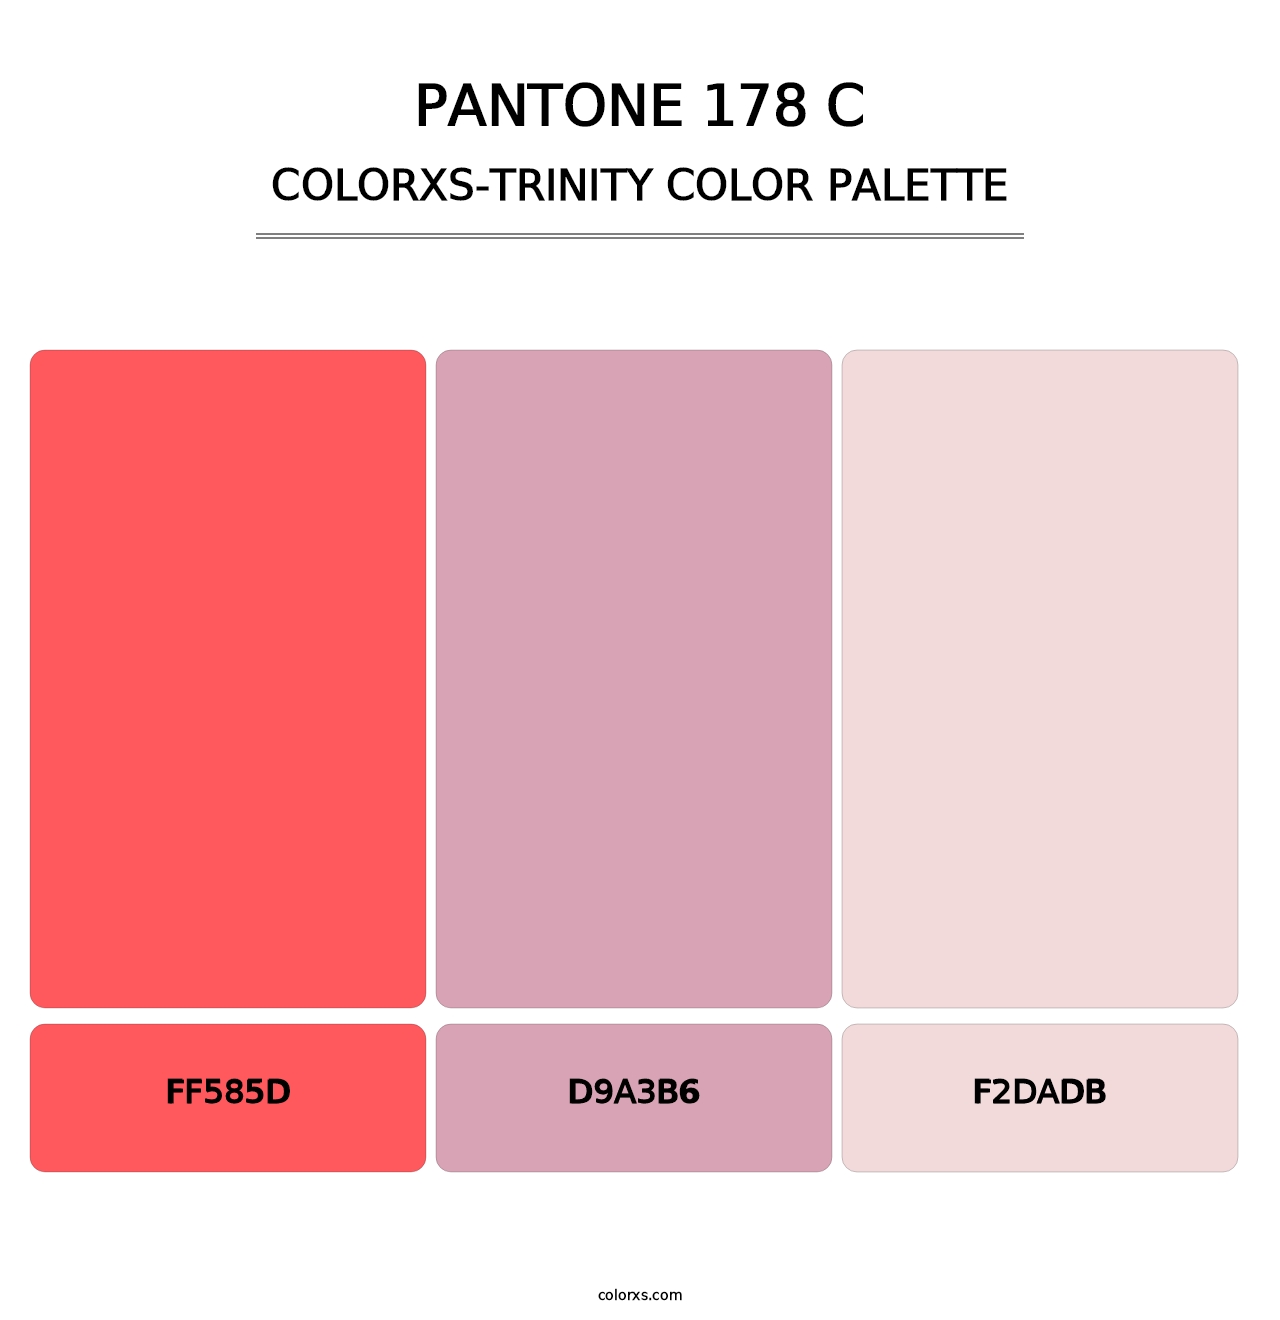 PANTONE 178 C - Colorxs Trinity Palette